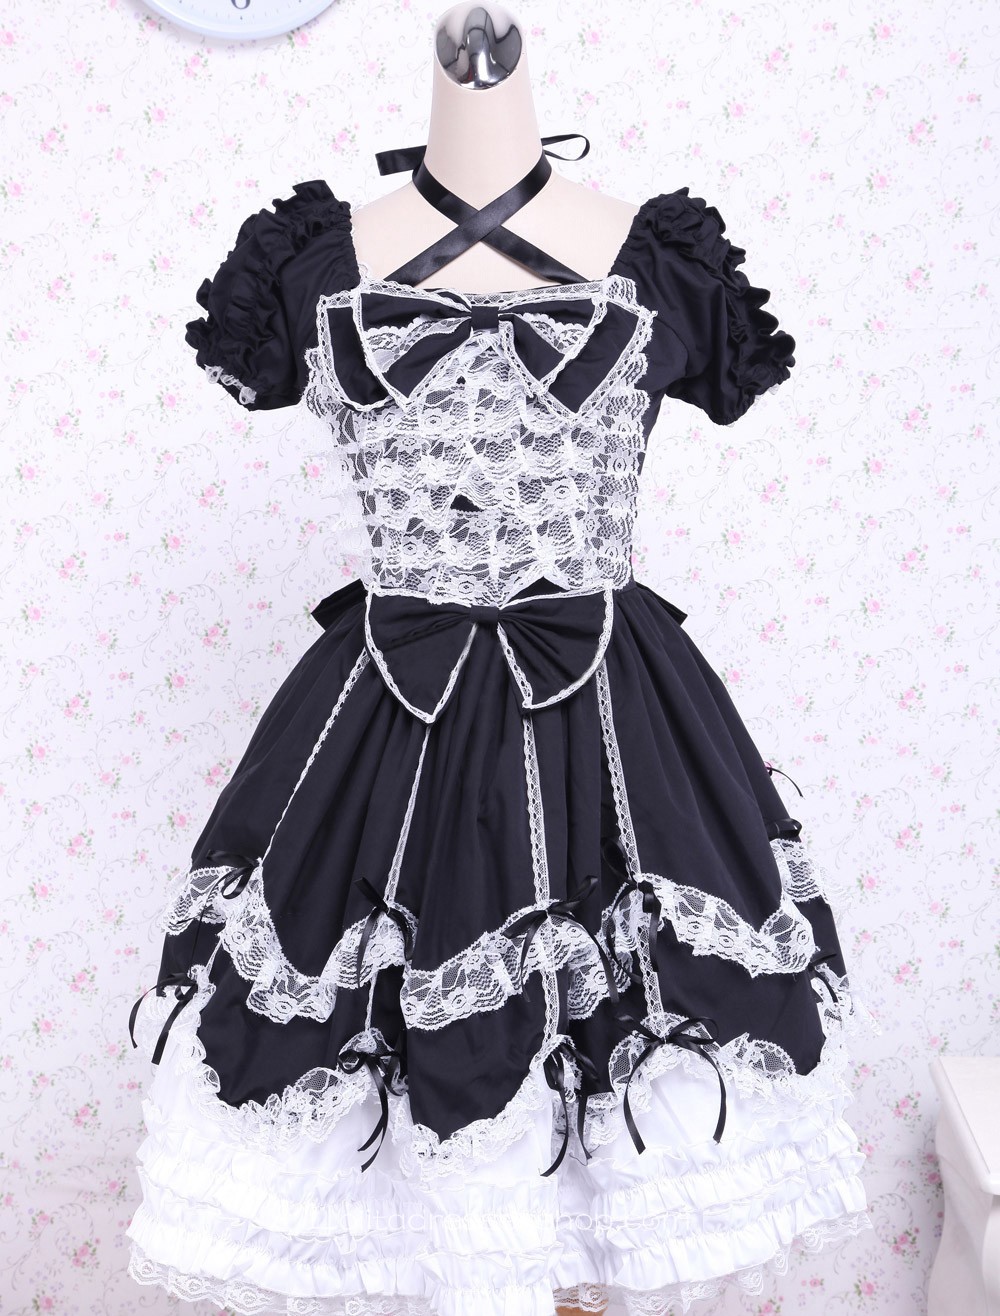 Cheap Black And White Cotton Square Neck Gothic Lace Trim Lolita Dress